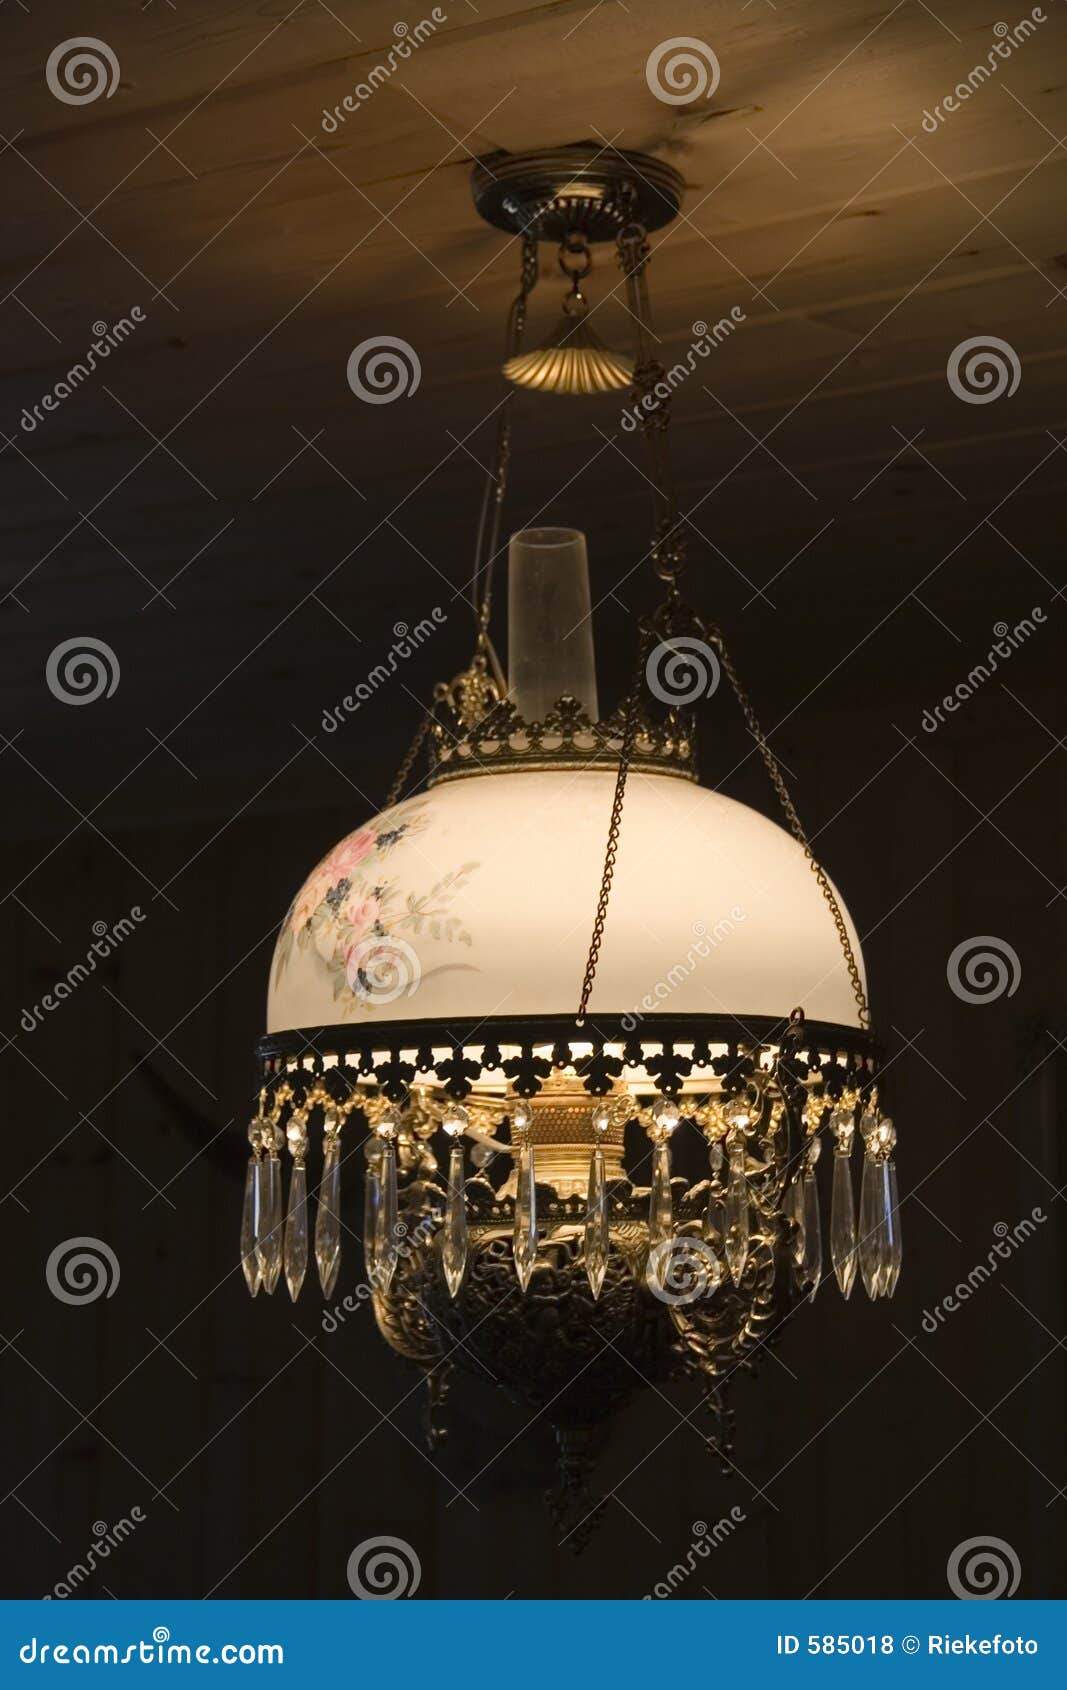 R Commandant Fruitig Antieke plafondlamp stock foto. Image of retro, glinsteren - 585018